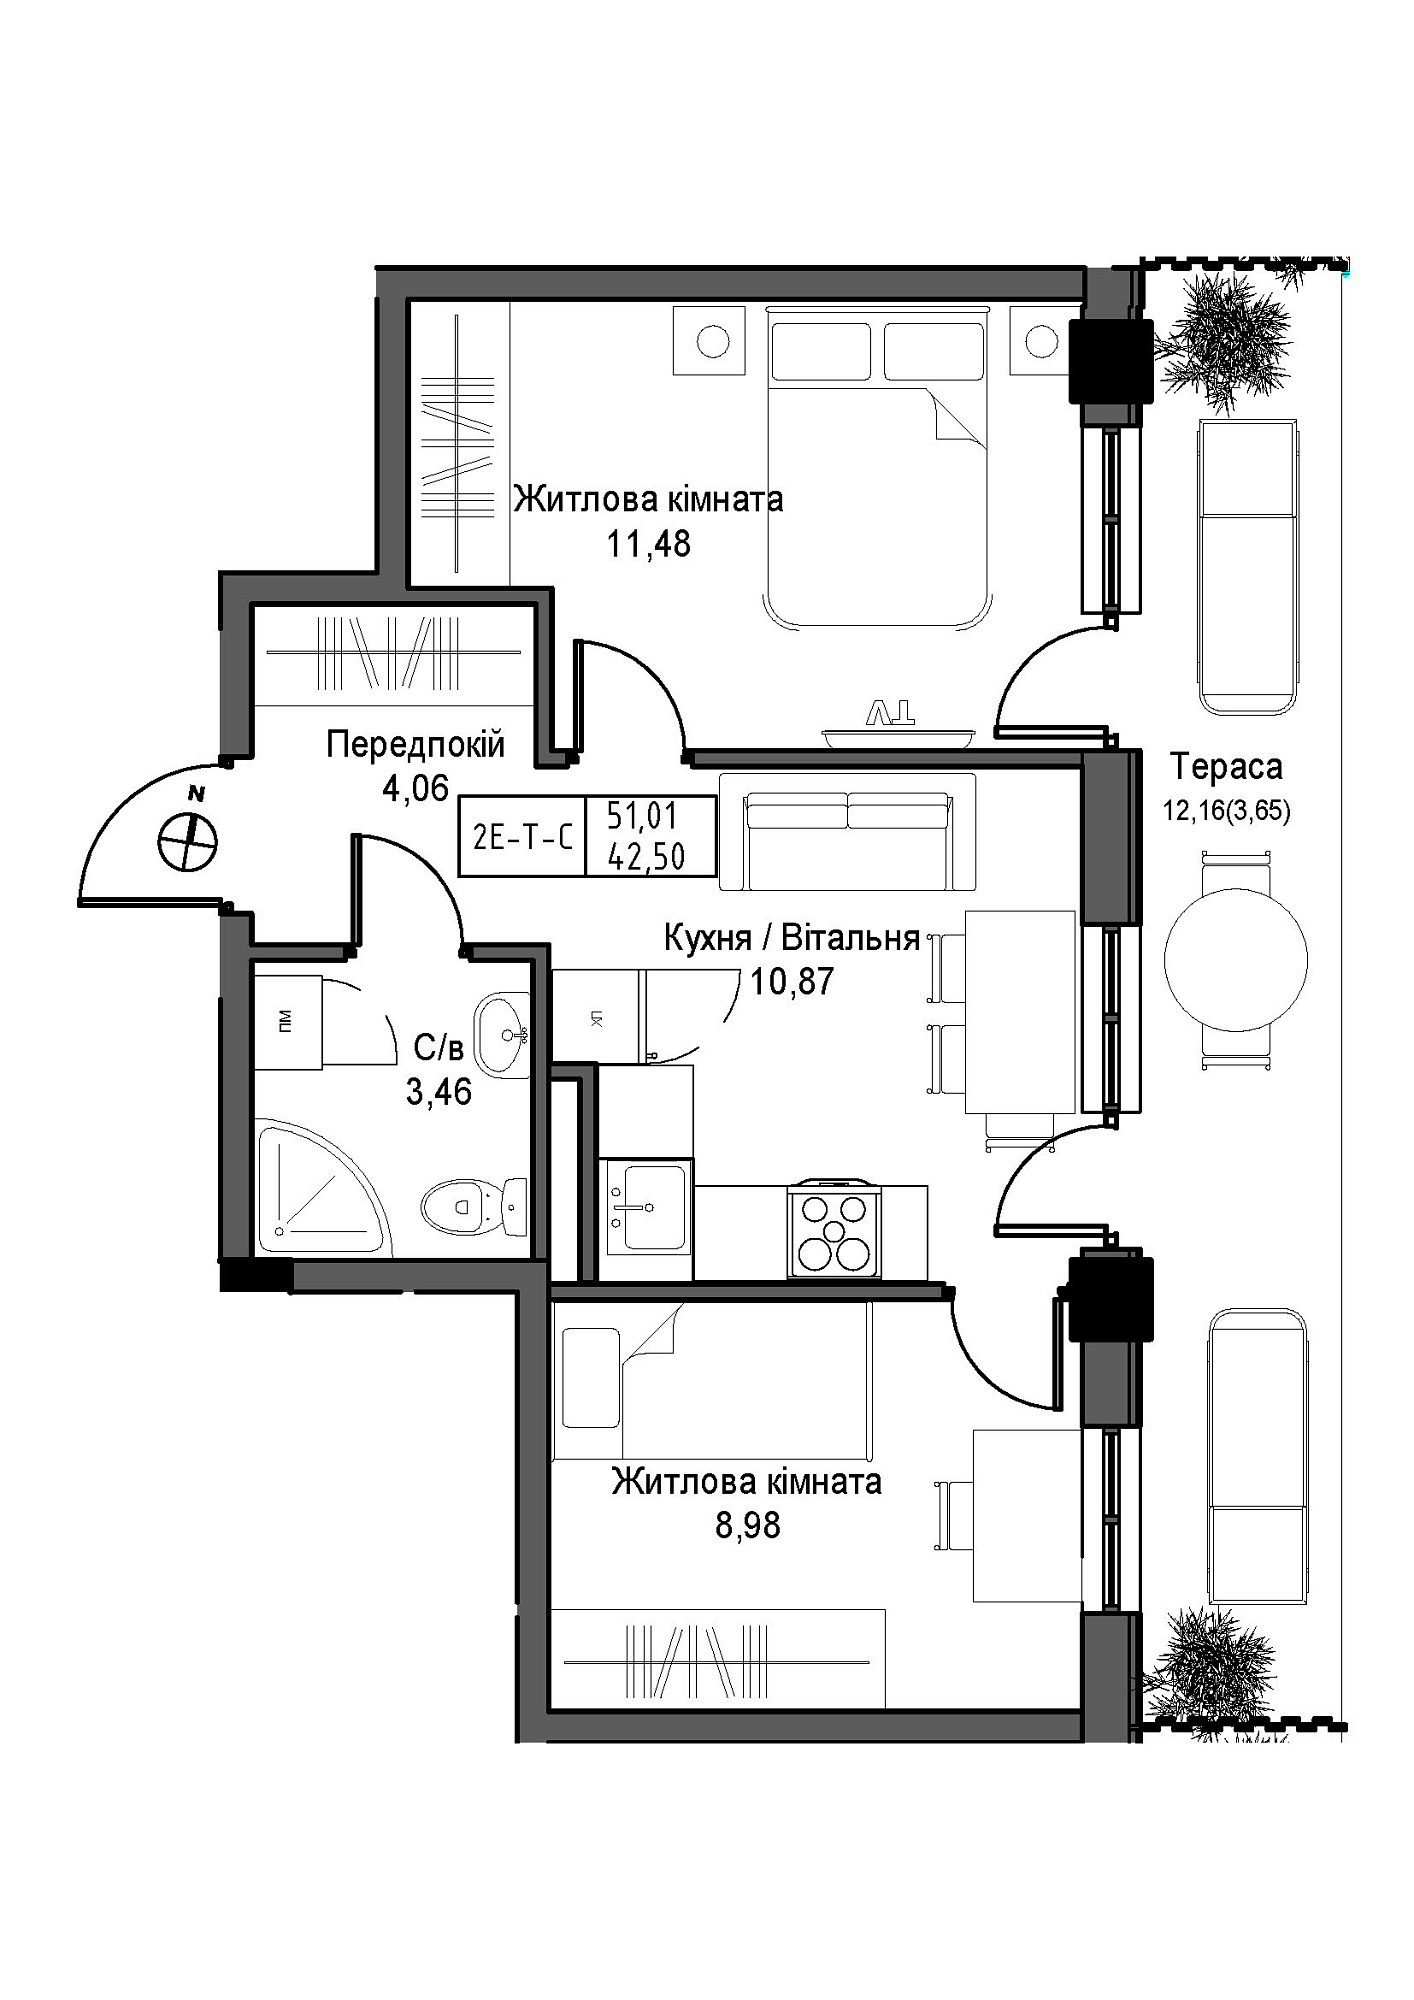 Planning 2-rm flats area 42.5m2, UM-007-09/0007.